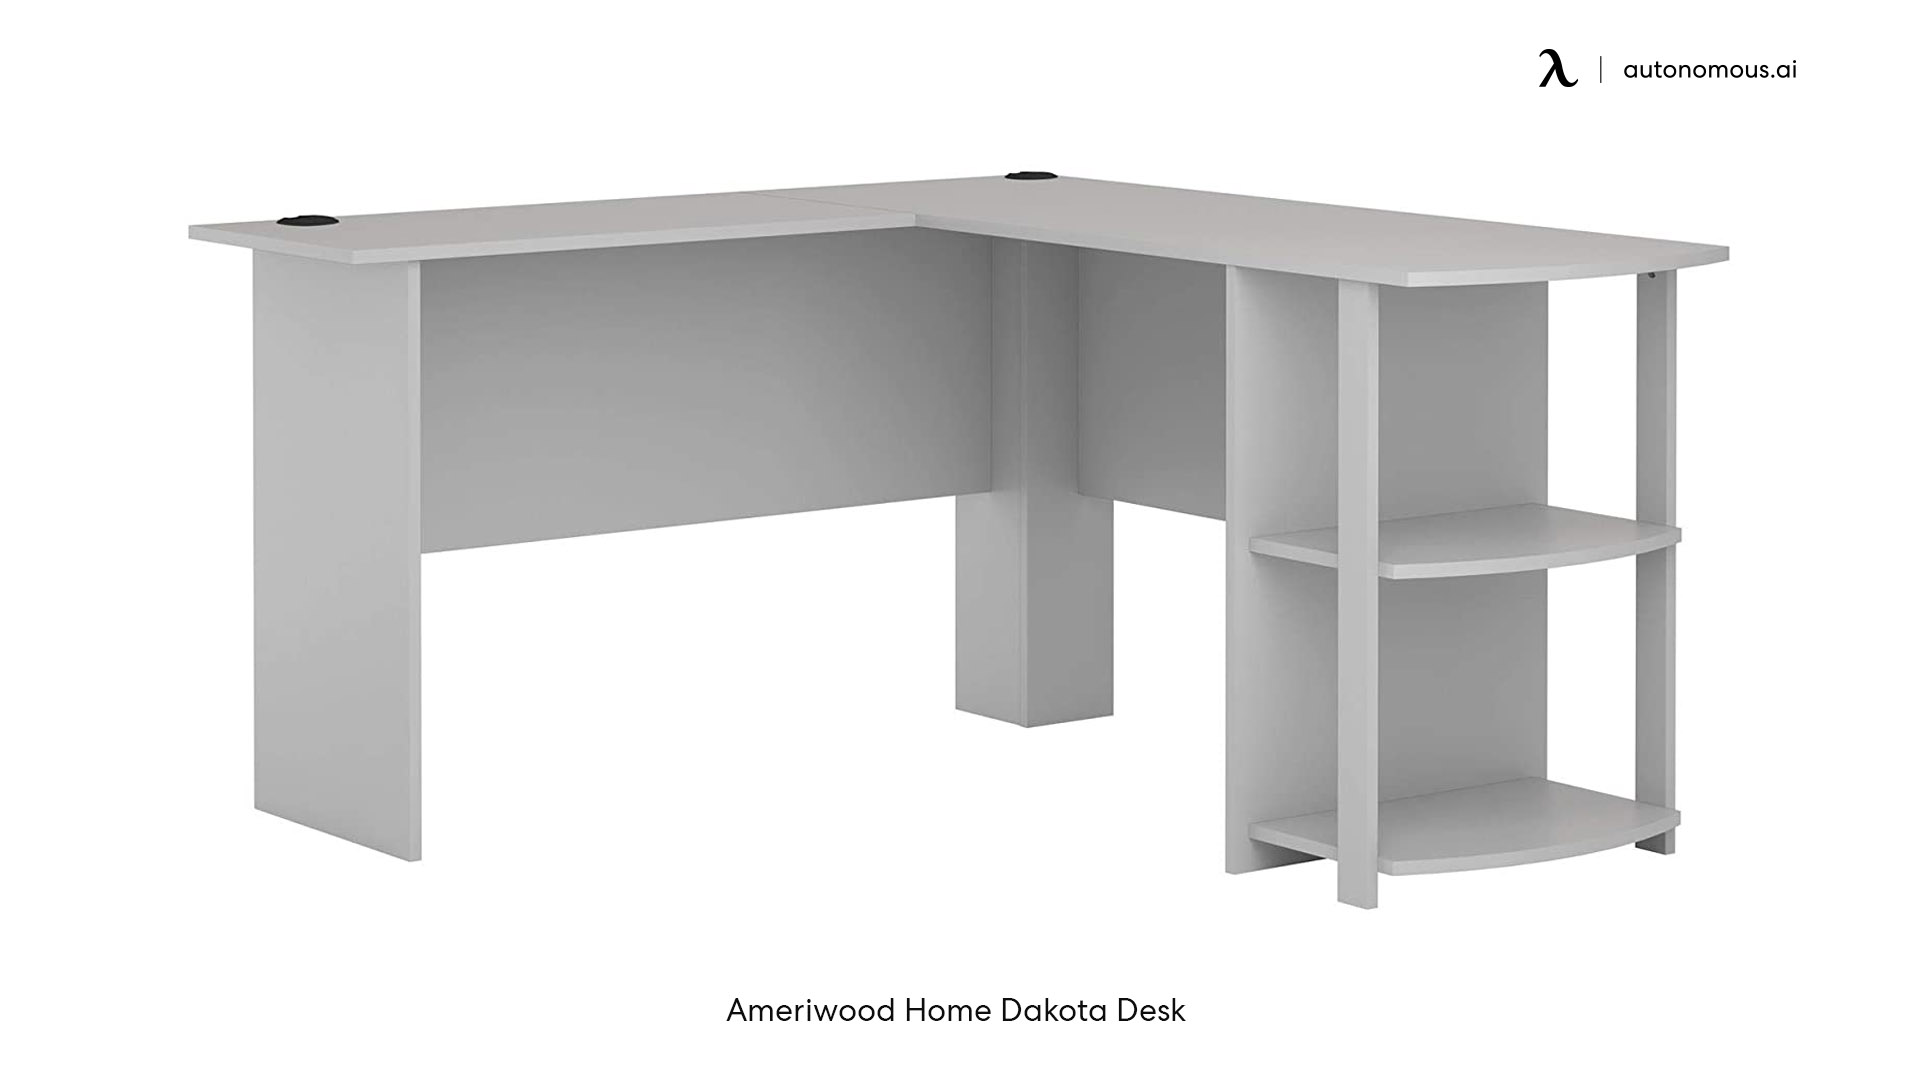 Ameriwood Home long white desk